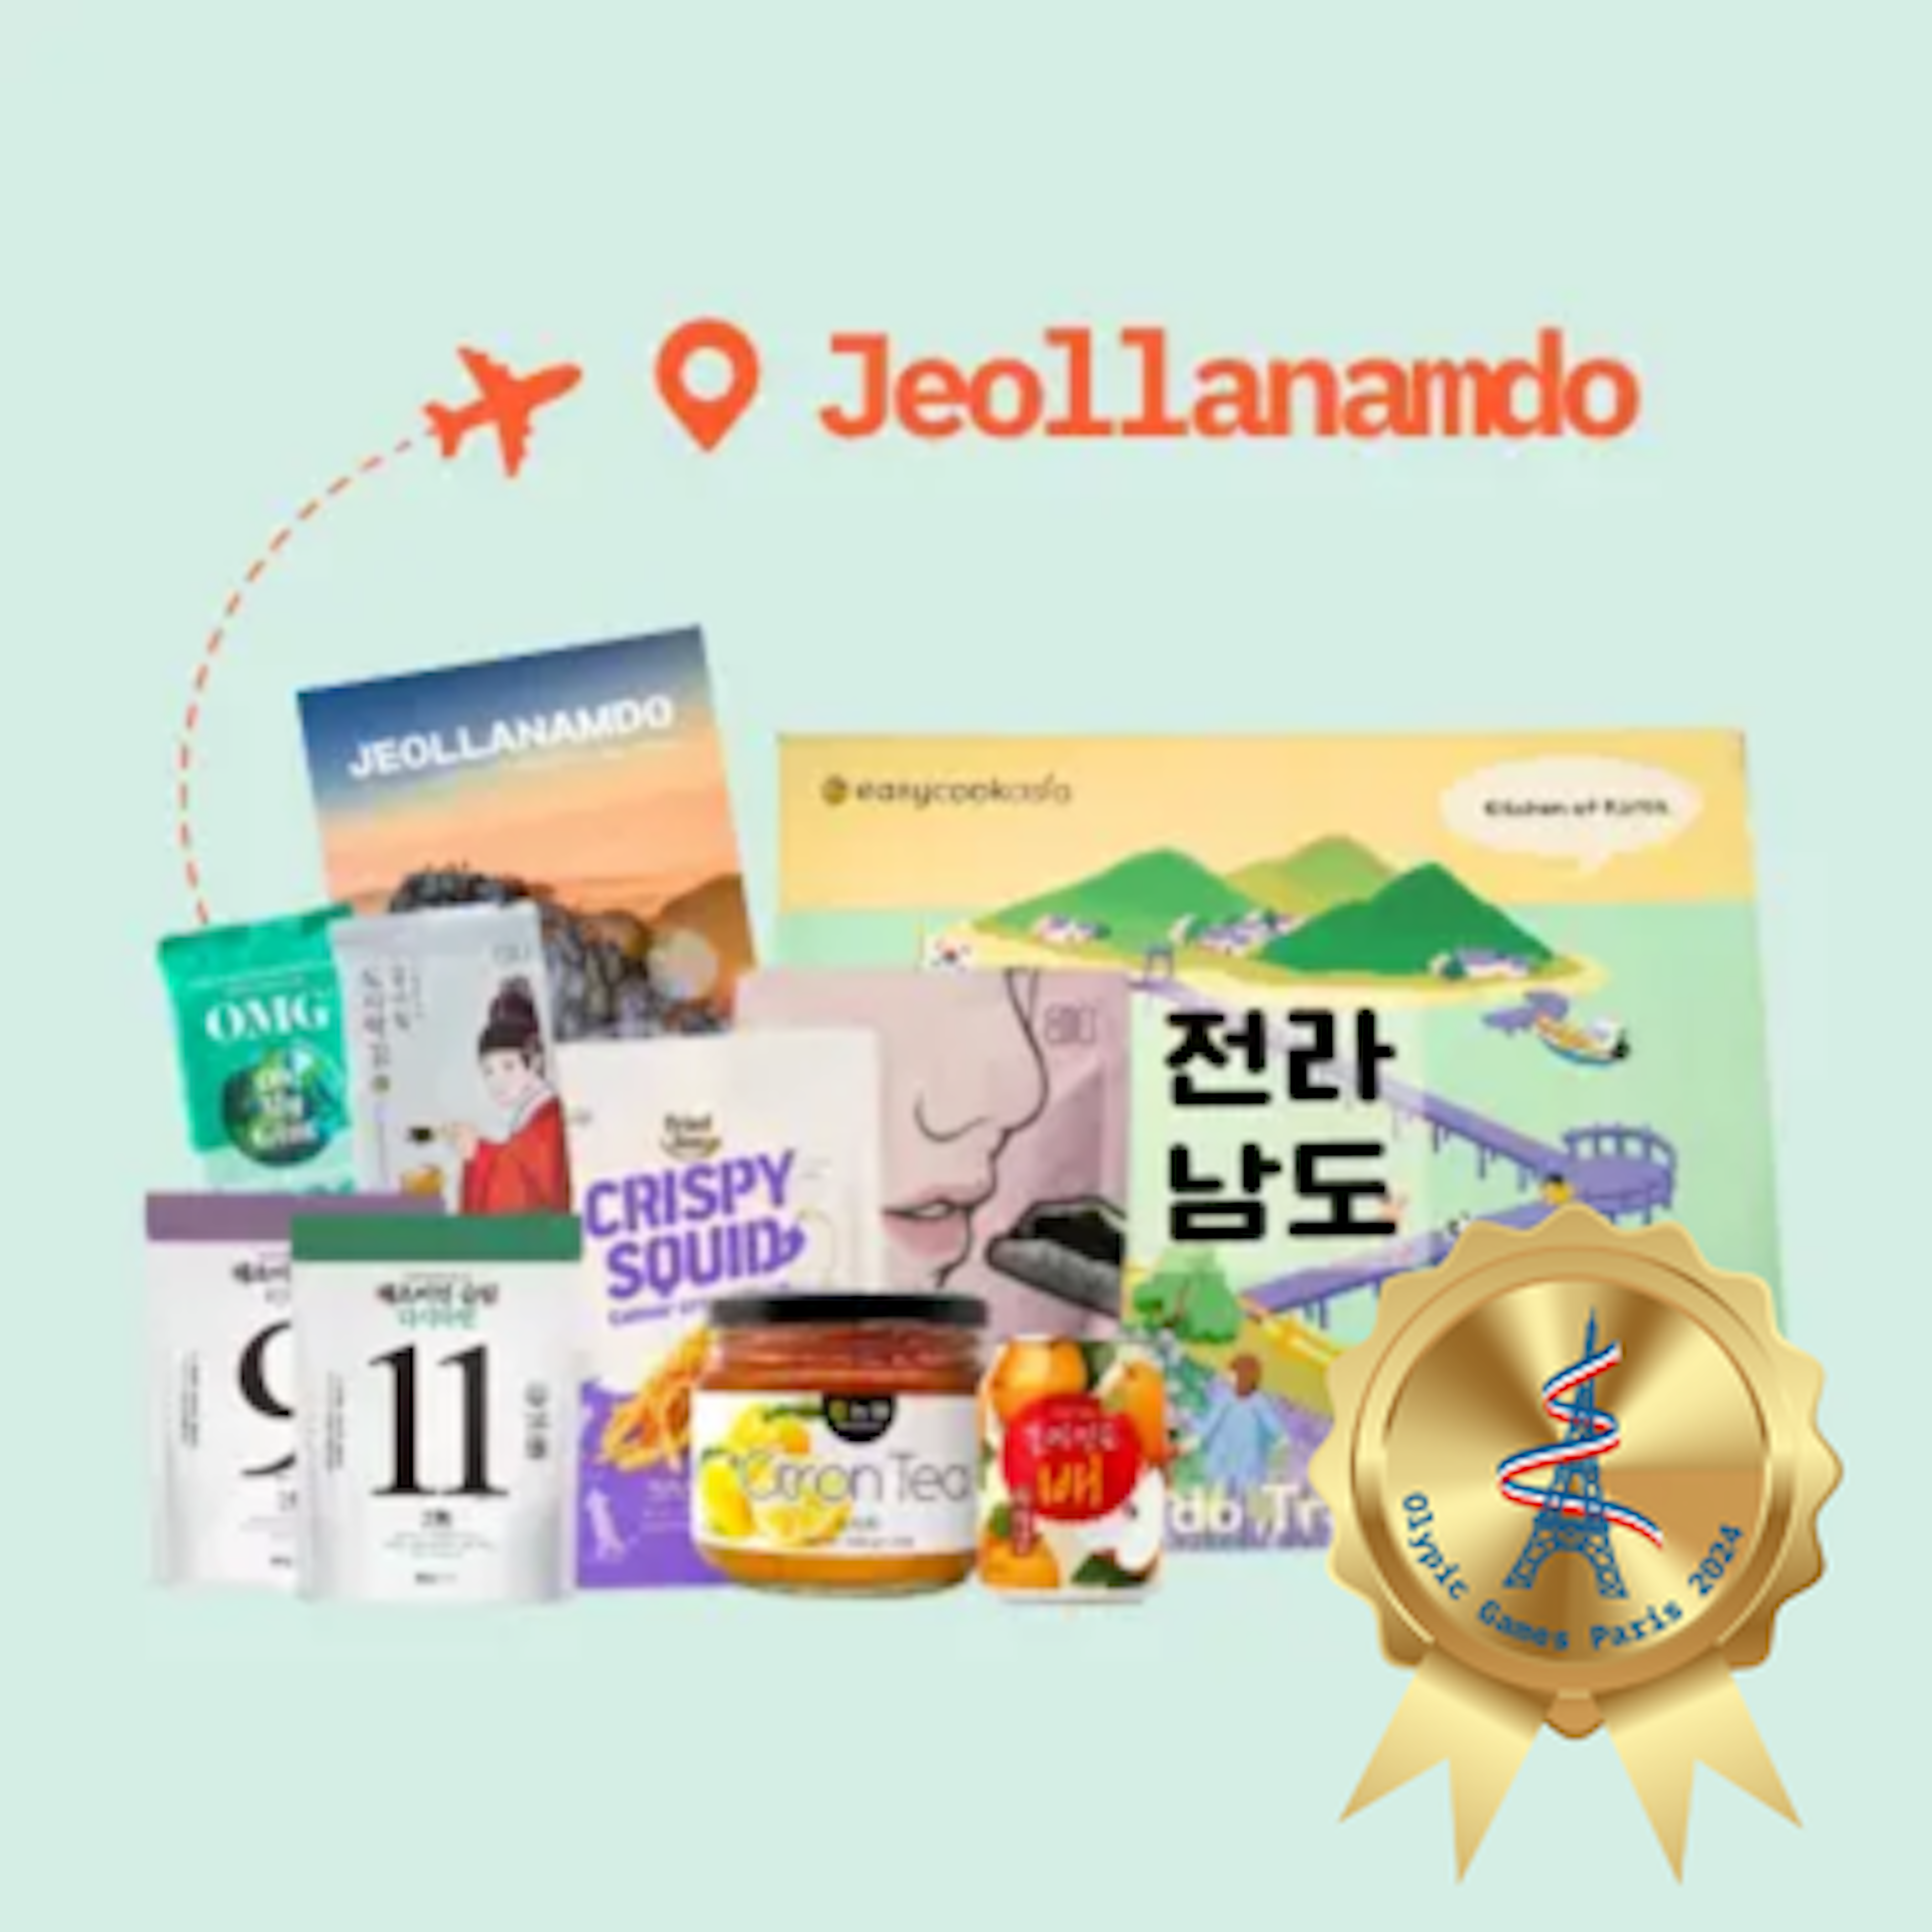 Jeonnam Travel Cook Box